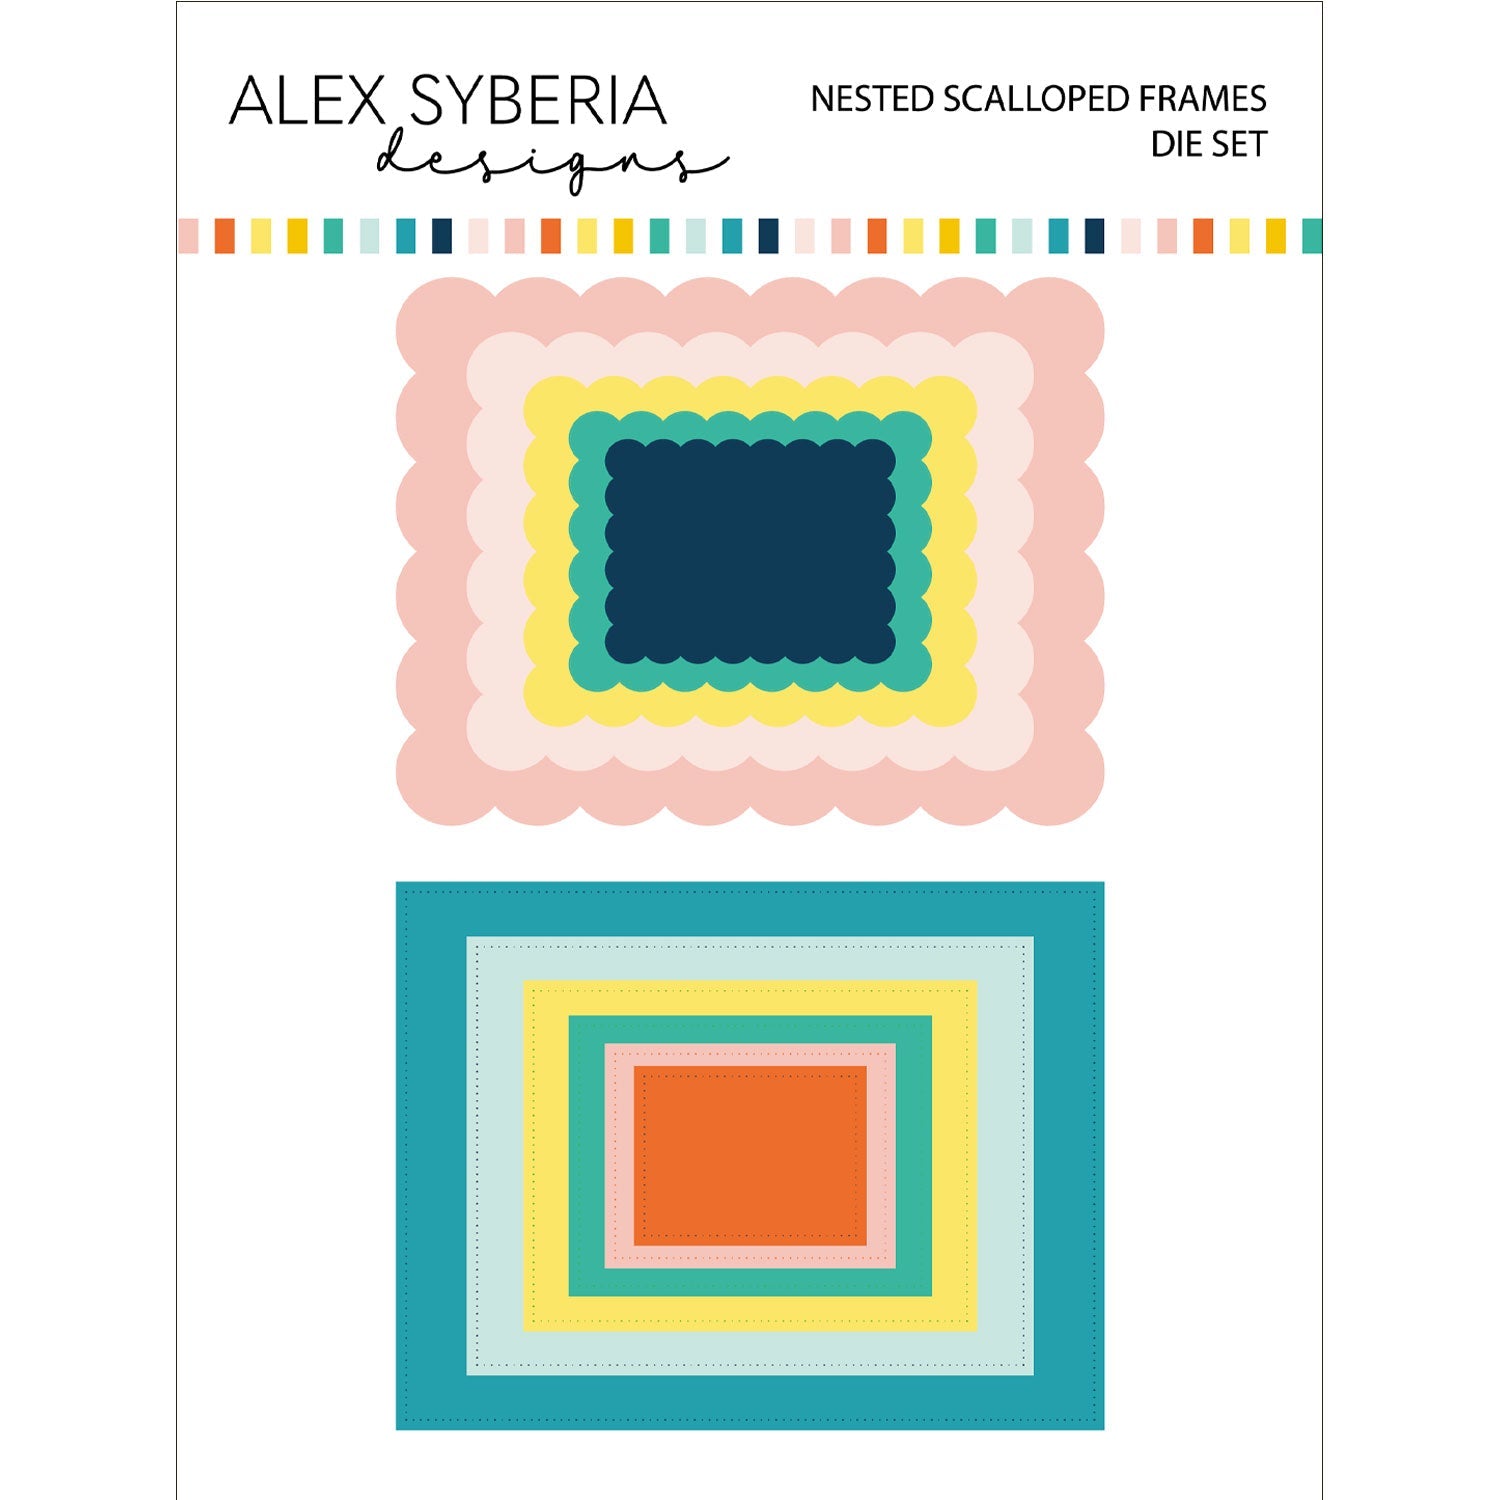 Nested-Scalloped-frames-Die-set-alex-syberia-designs-hand-made-blog-cardmaking-scrapbooking